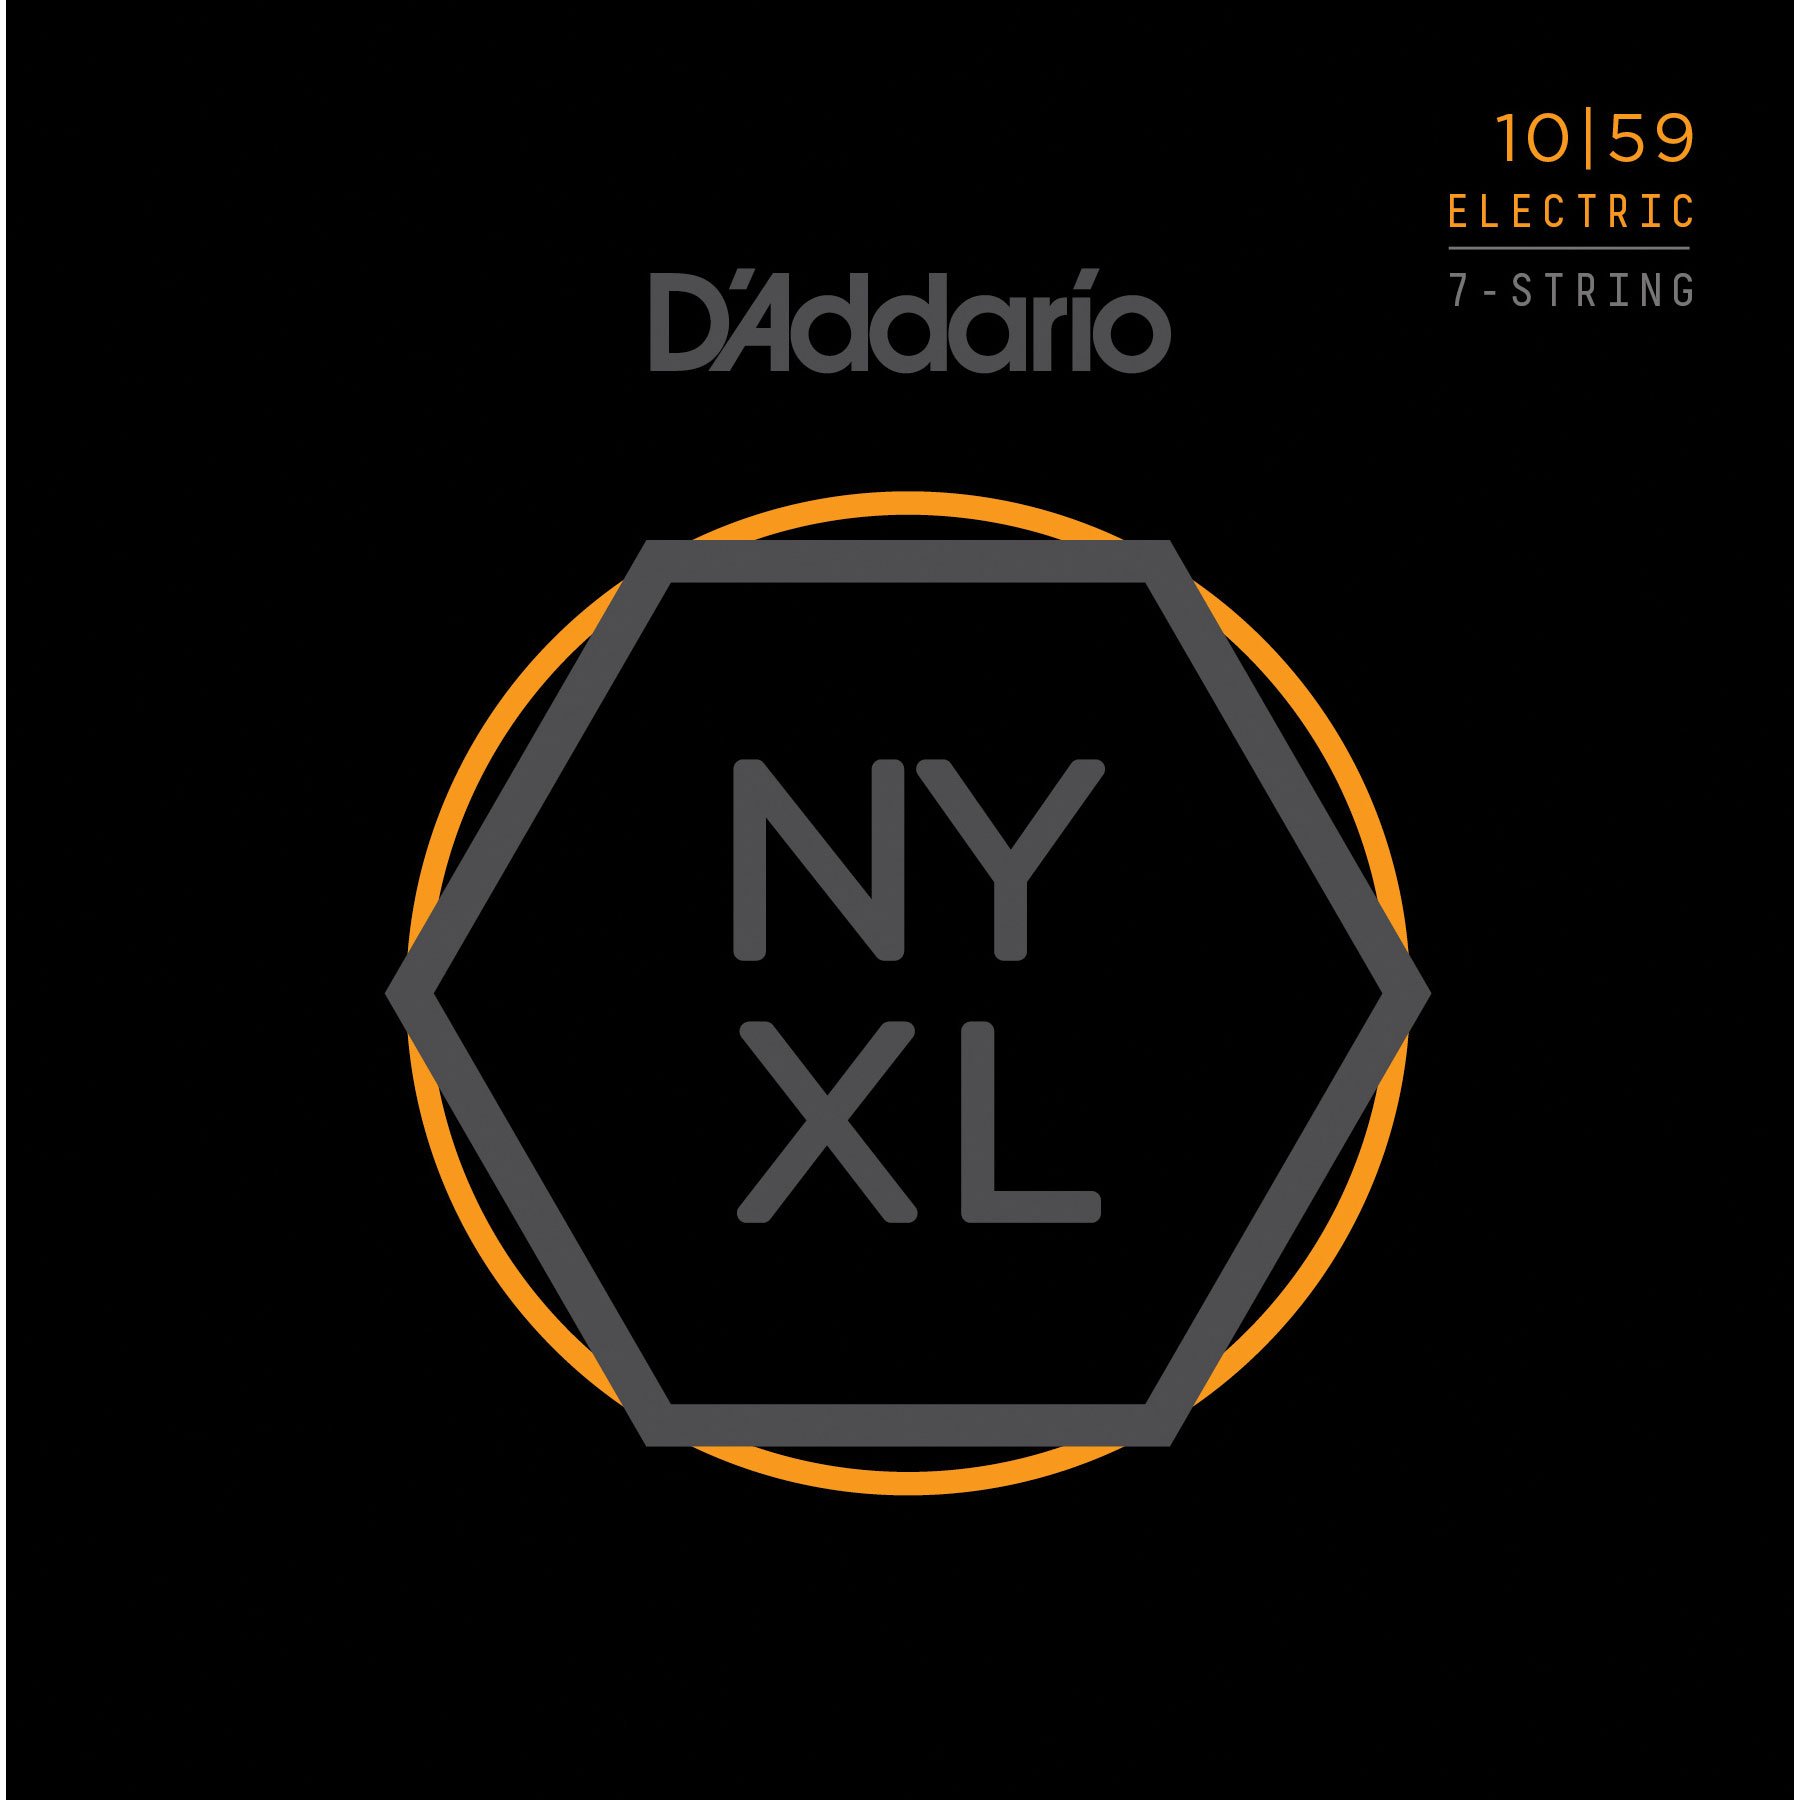 D'Addario NYXL Nickel Wound 7-string Electric Guitar Strings